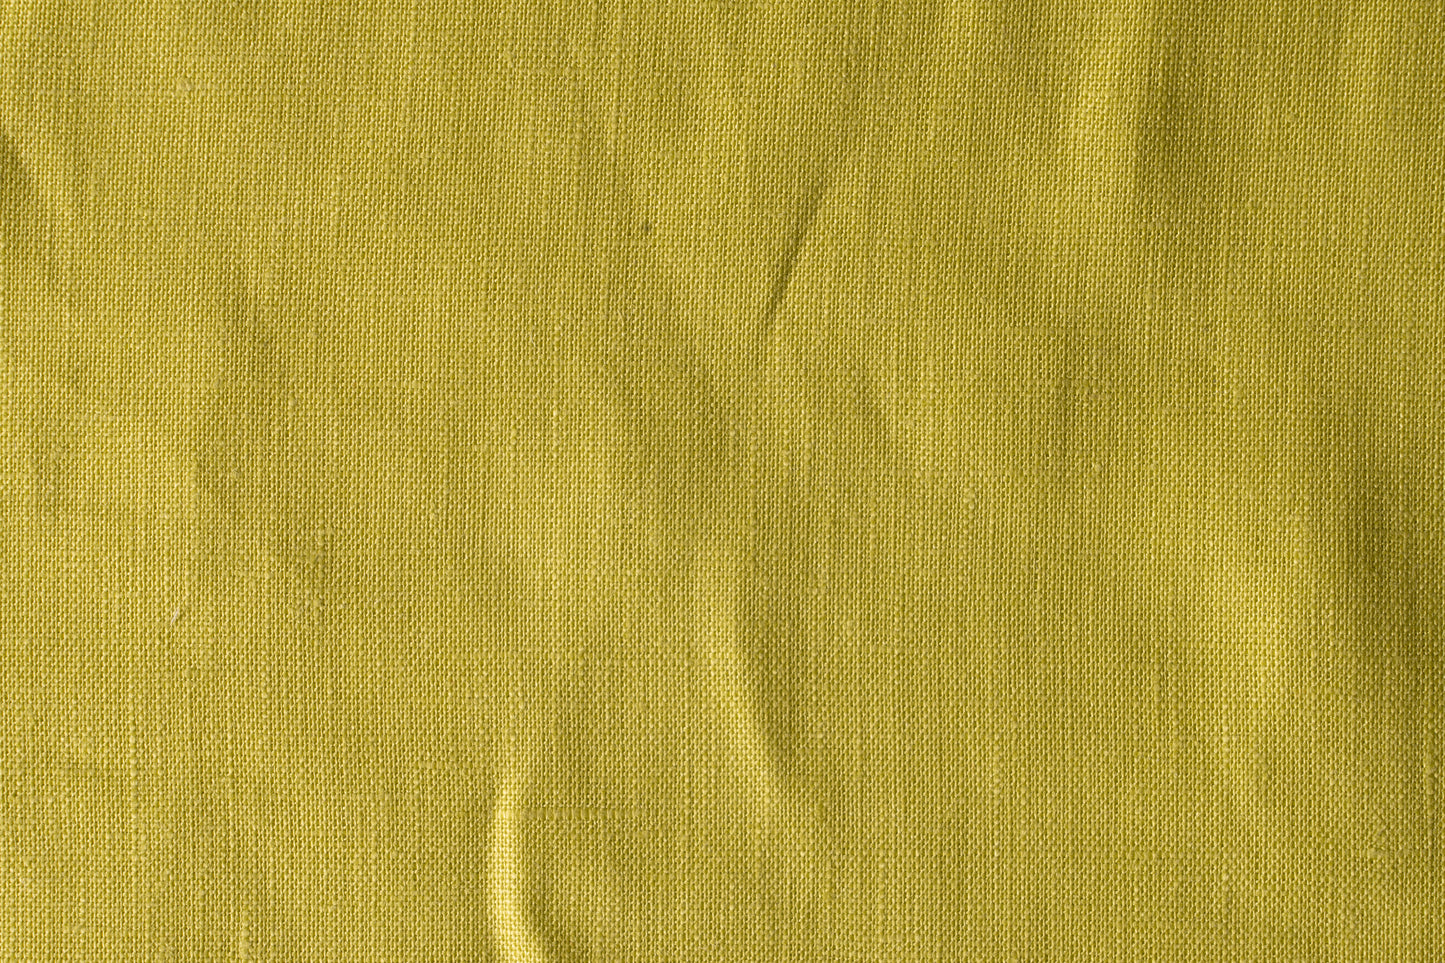 Medium Weight Fabric by the Yard Yellow (5.5 Oz/Sq Yard)